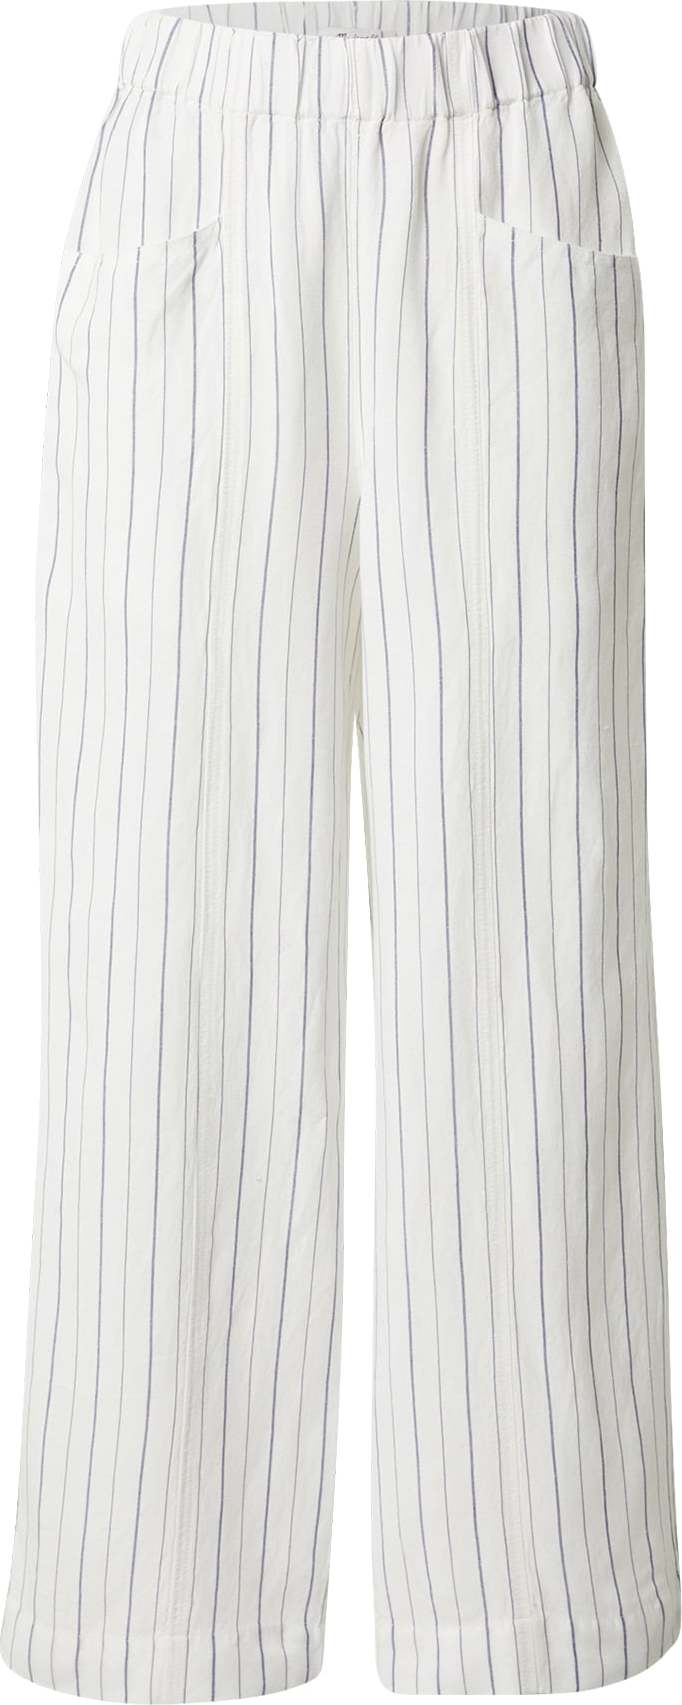 Madewell Kalhoty bílá / námořnická modř